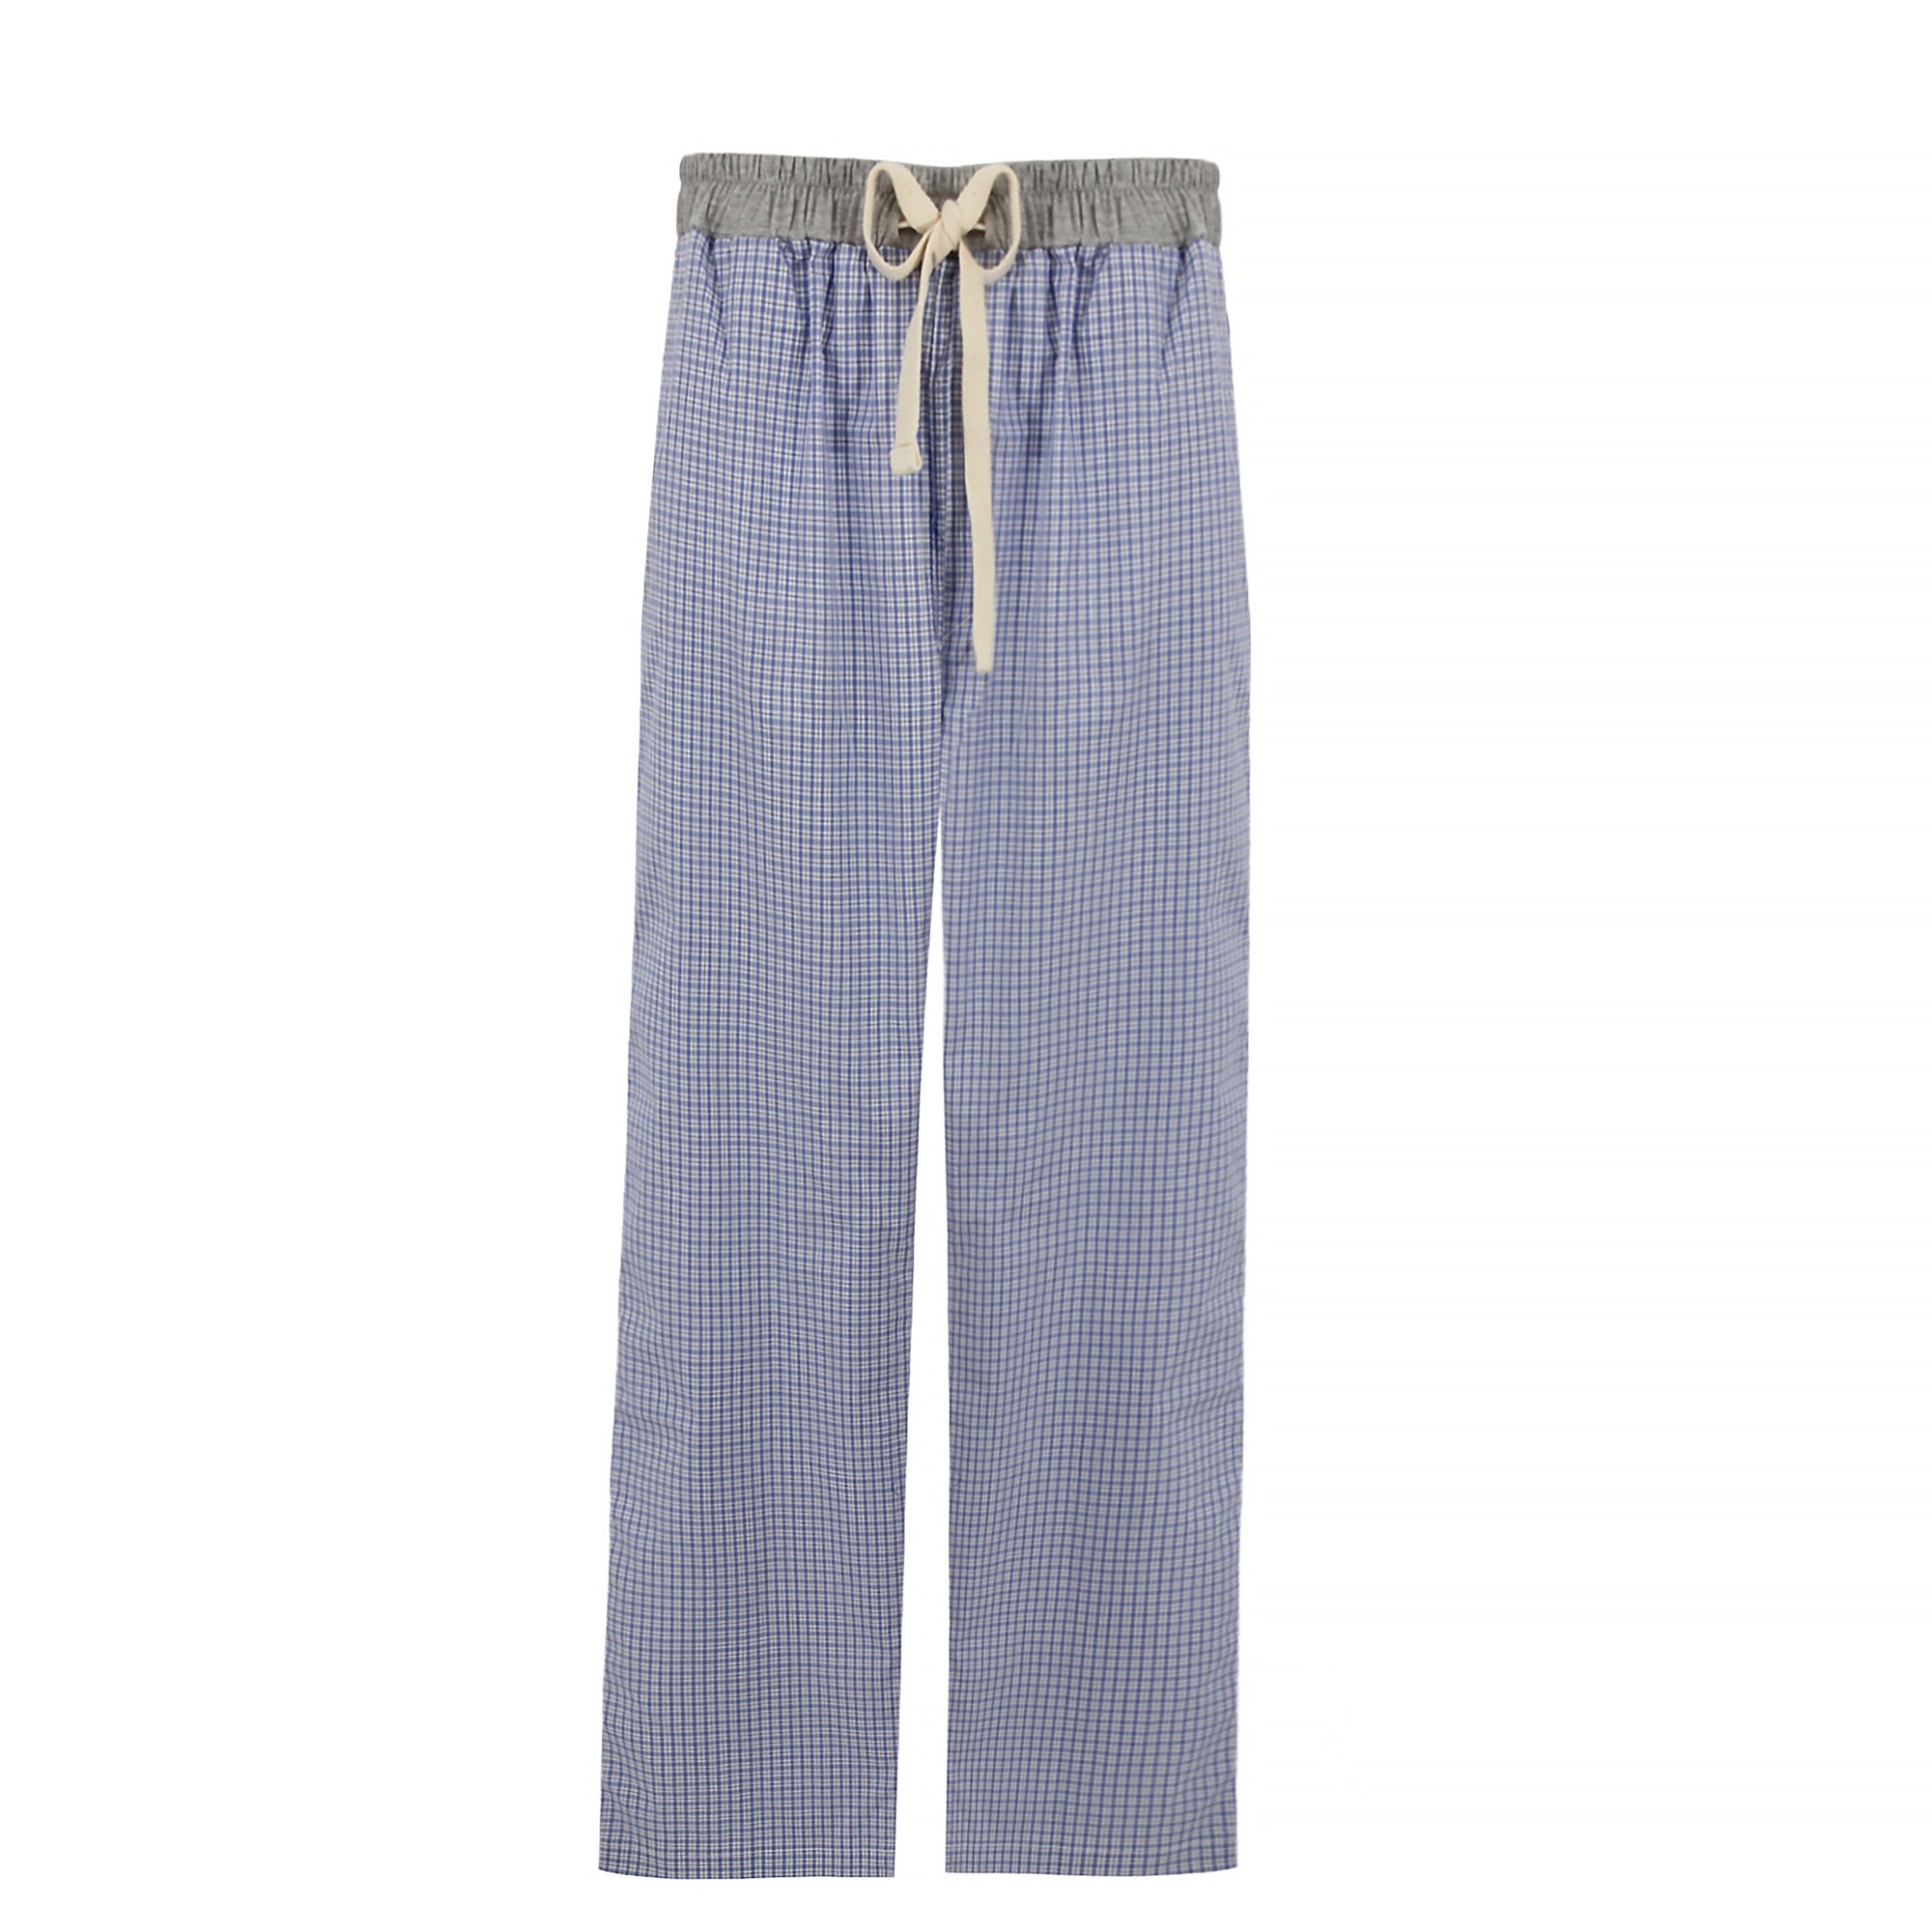 Blue/White Checkered Pyjama Pants